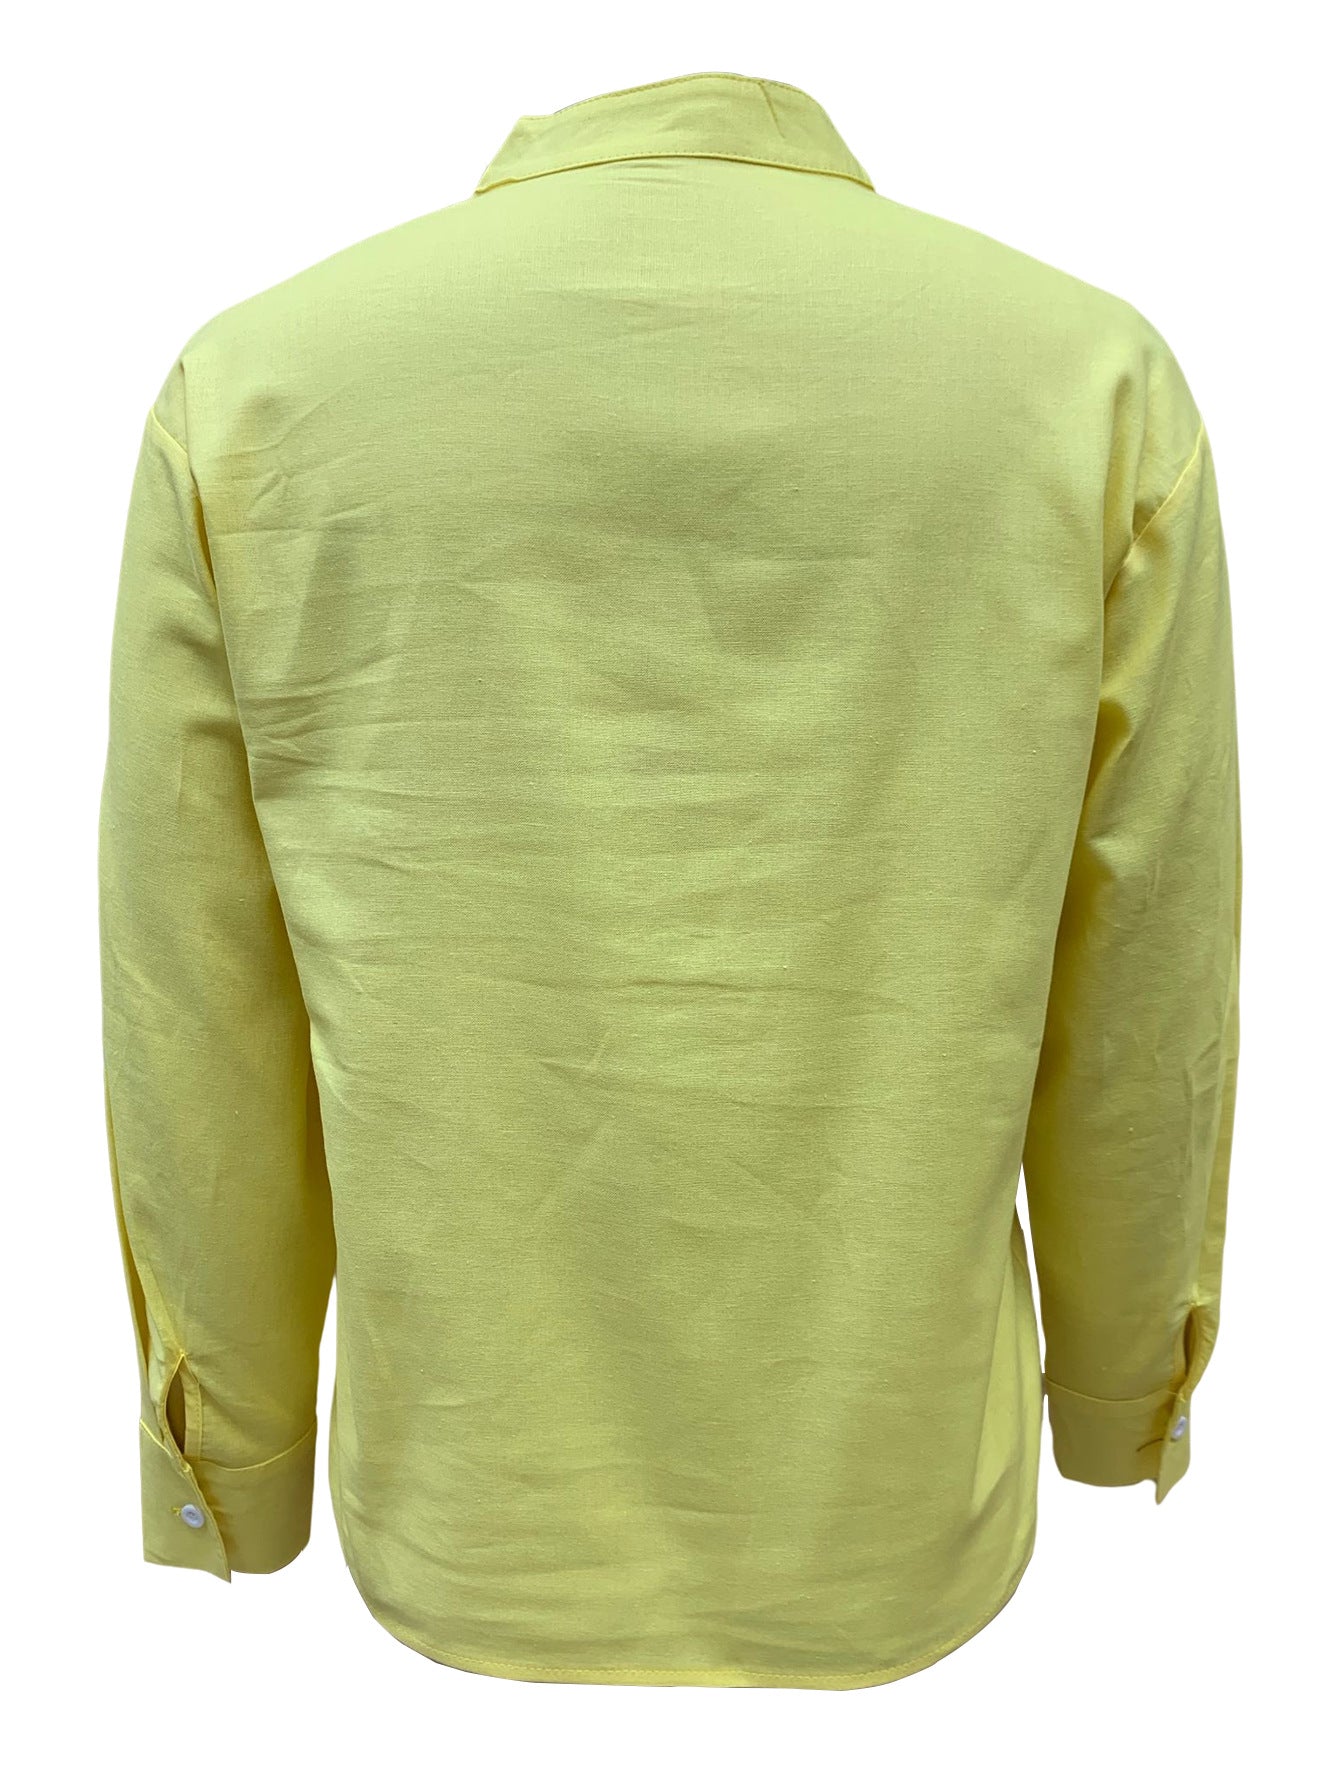 NTG Fad Shirts & Tops Stand Collar Casual Cotton Shirt